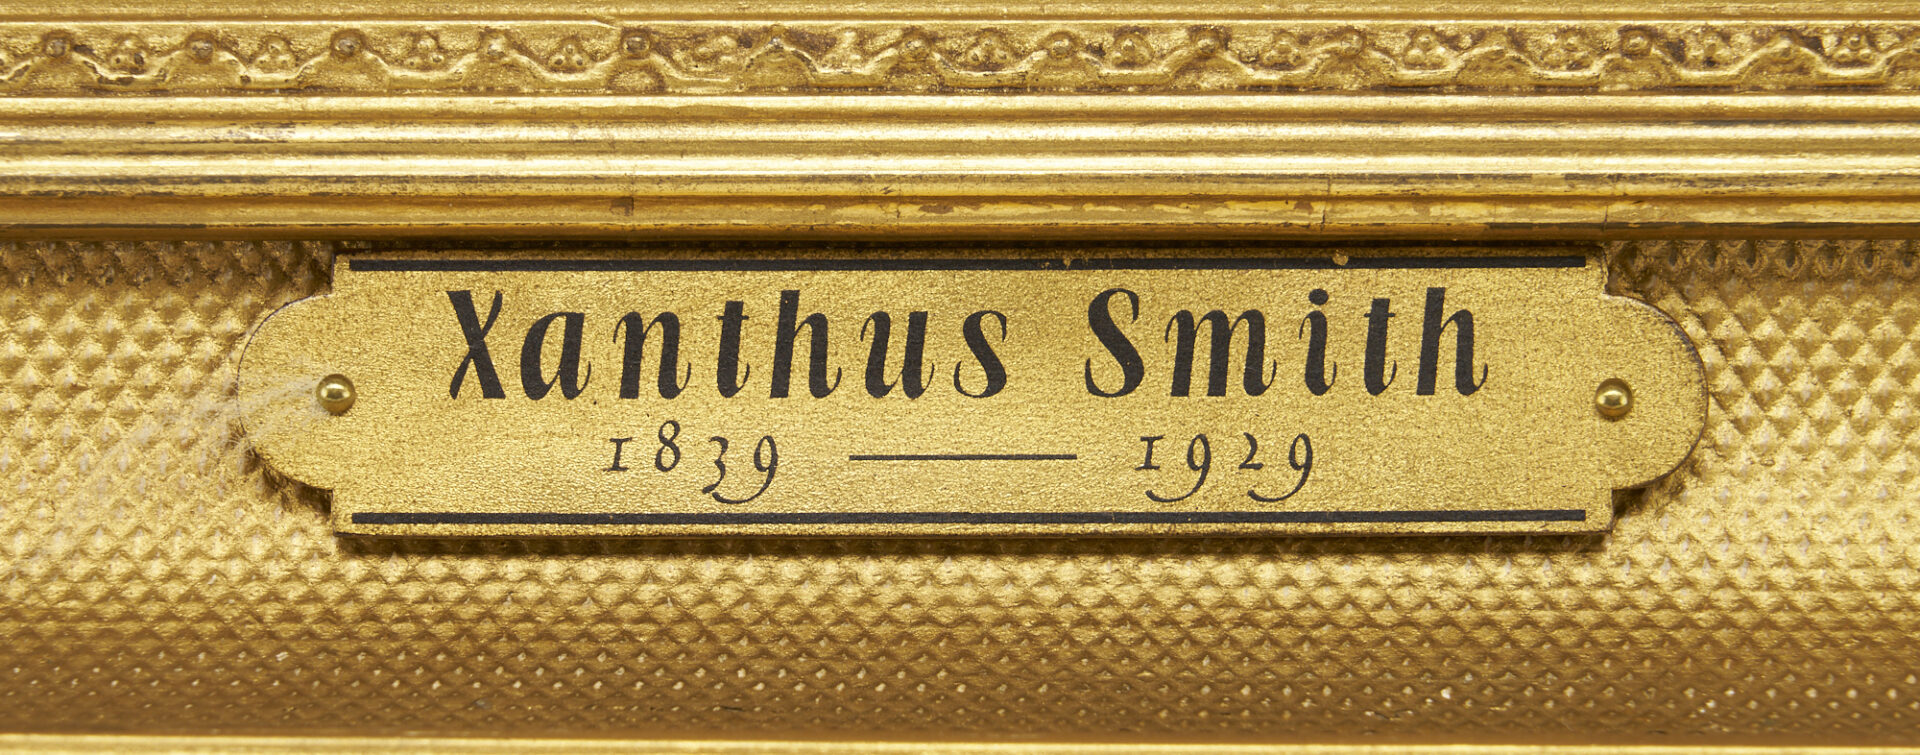 Lot 539: Xanthus Smith O/B Painting, Brig, Outward Bound, Hampton Roads VA 1865